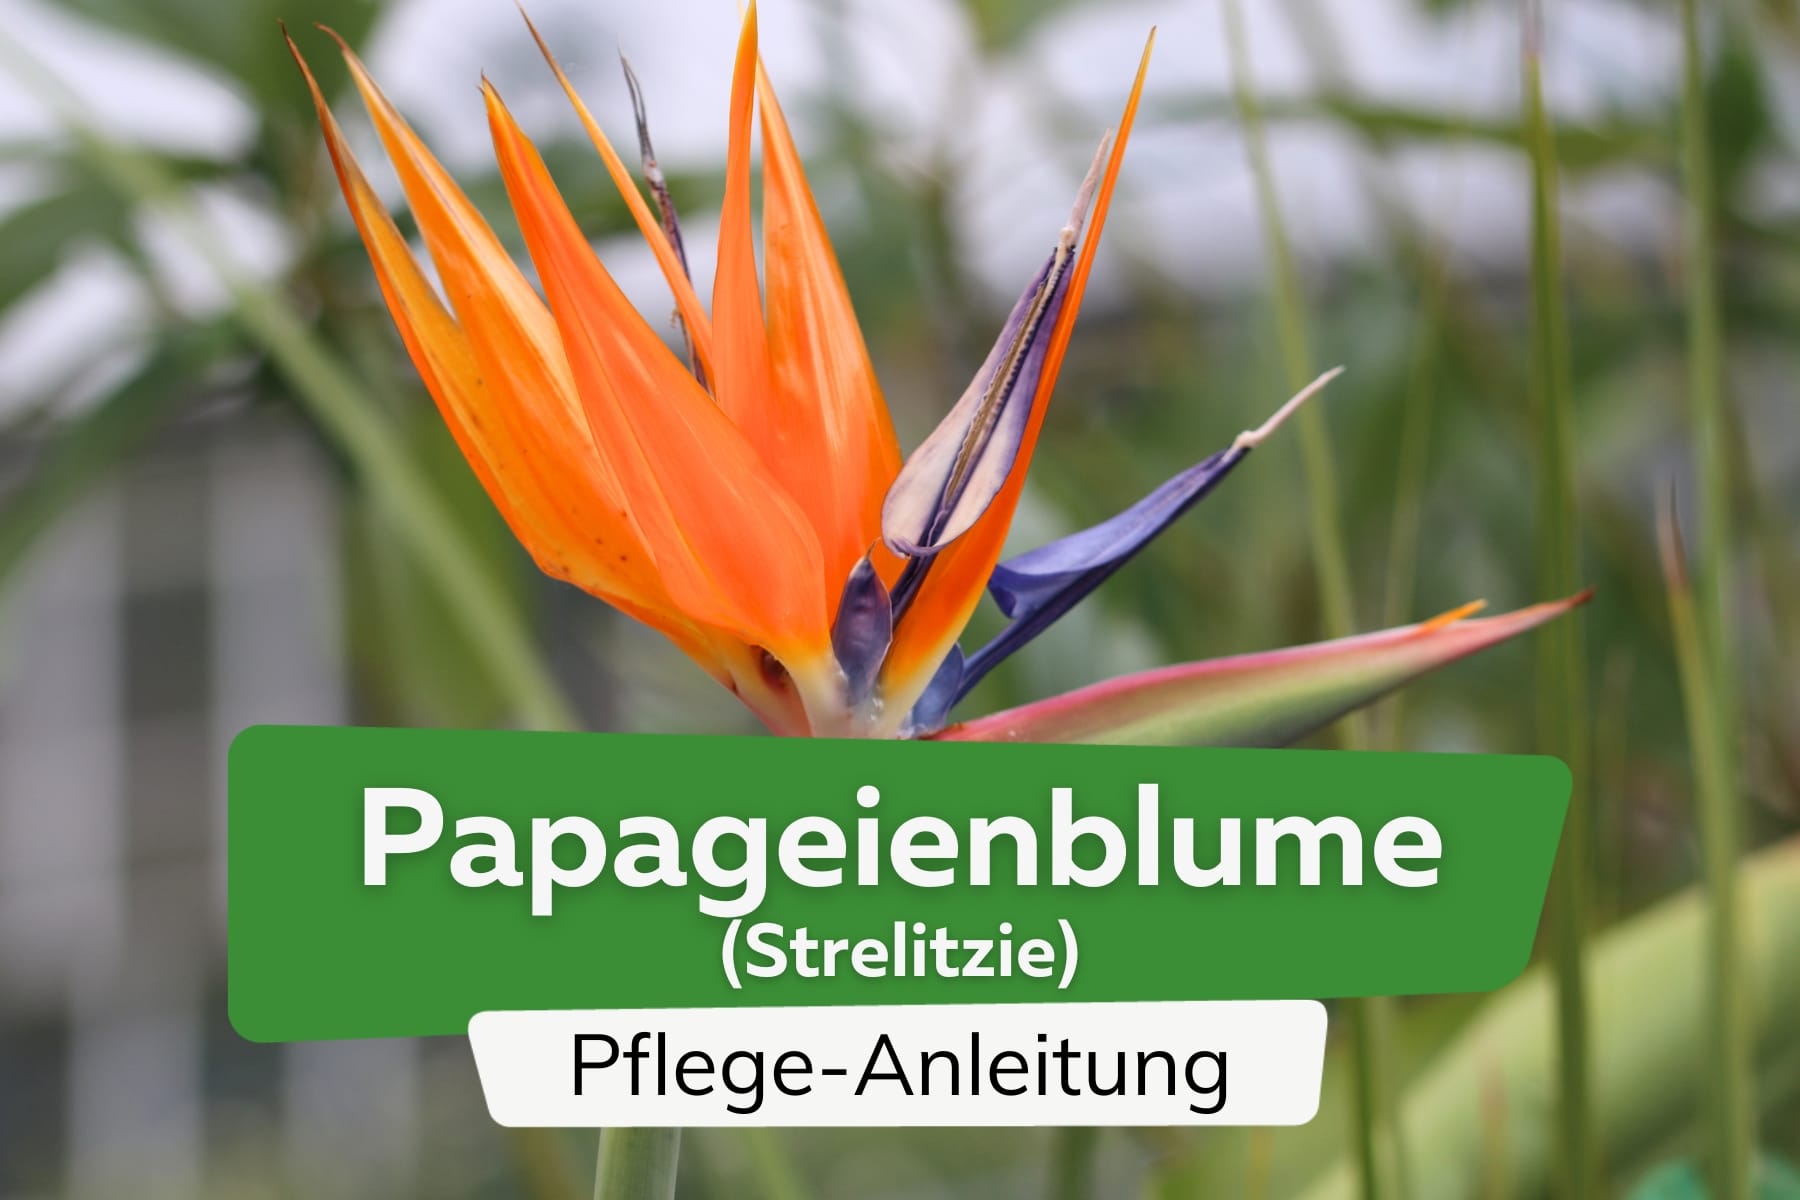 Papageienblume/Strelitzie